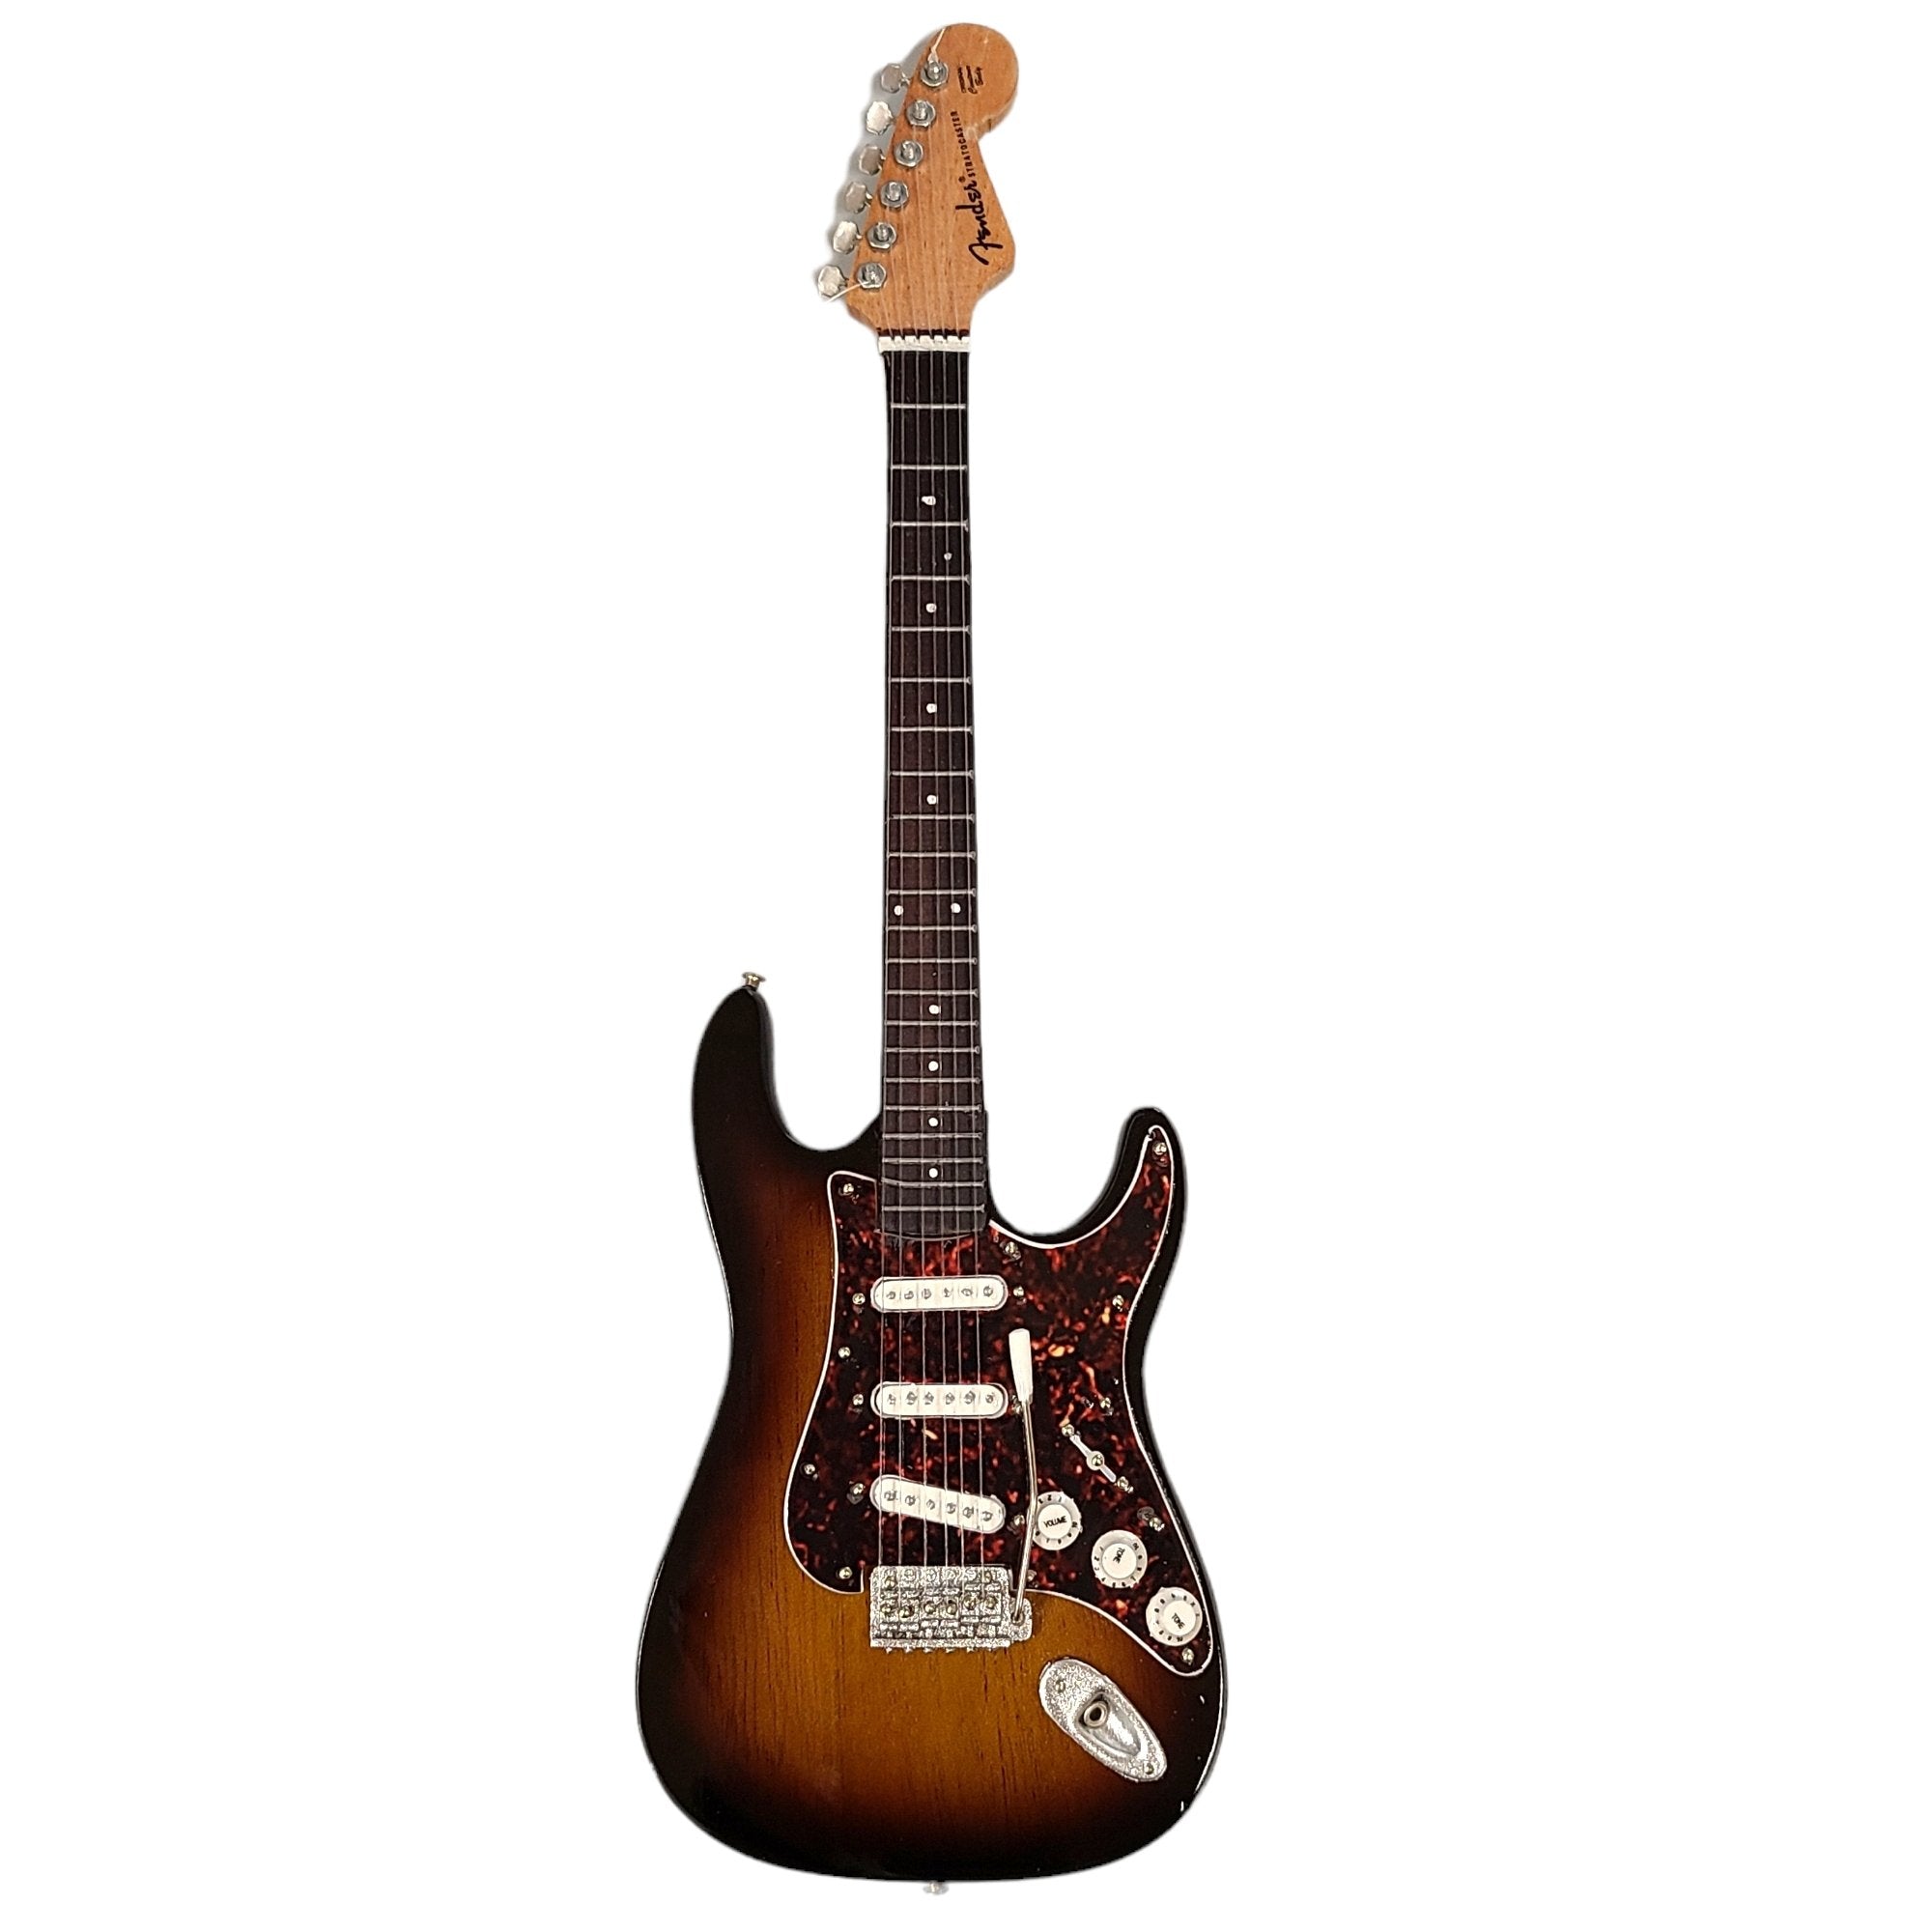 Axe Heaven Sunburst Fender Stratocaster Mini Guitar Replica FS-021